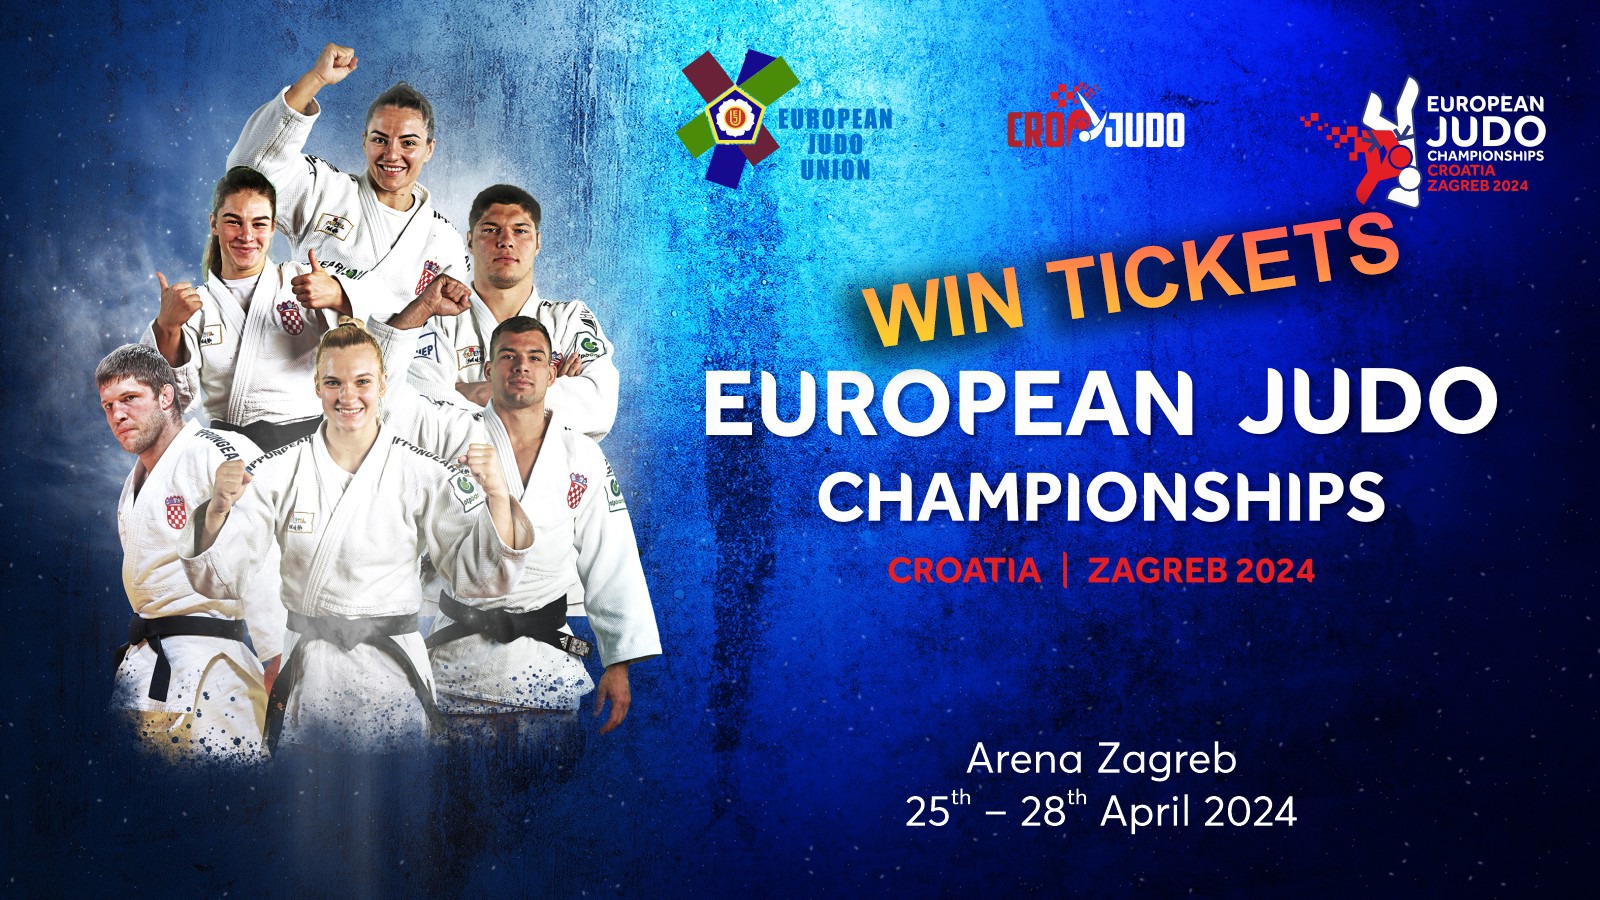 ANNOUNCEMENT: ZAGREB EC TICKET WINNERS